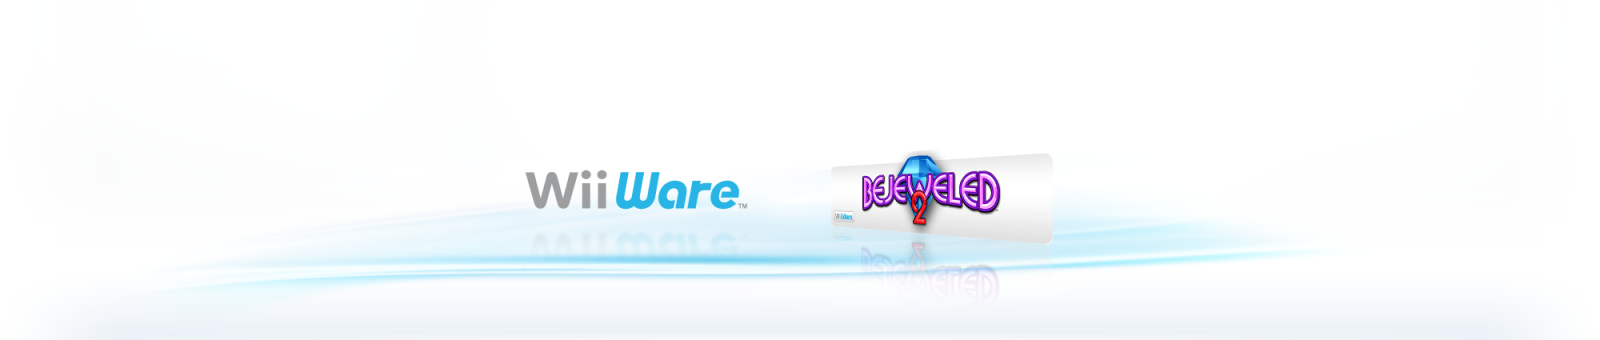 Bejeweled 2 (2010), WiiWare Game